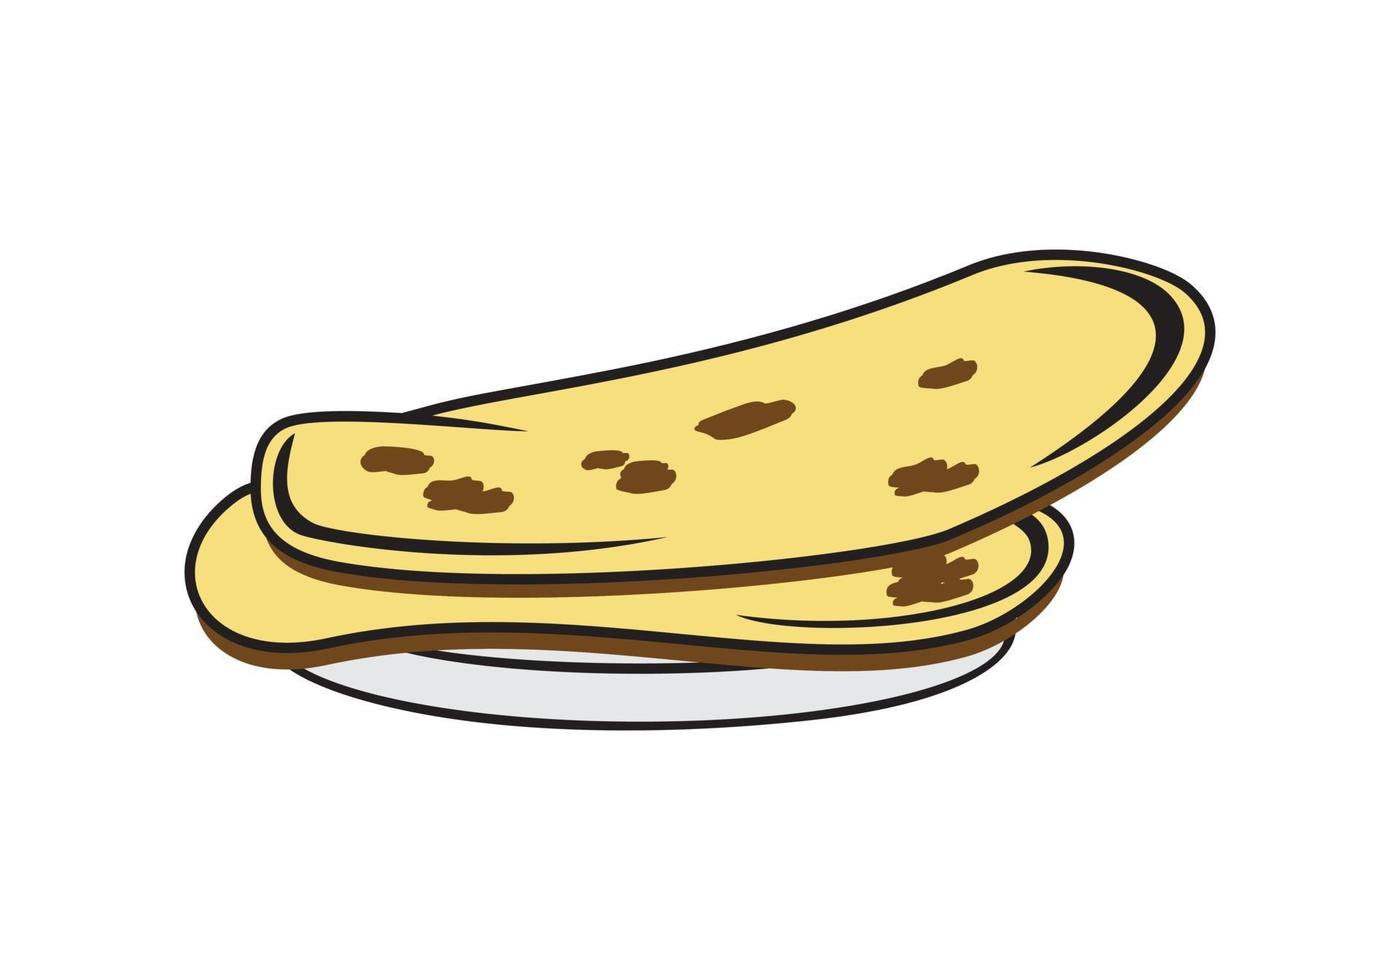 Indian prata bread design illustration vector